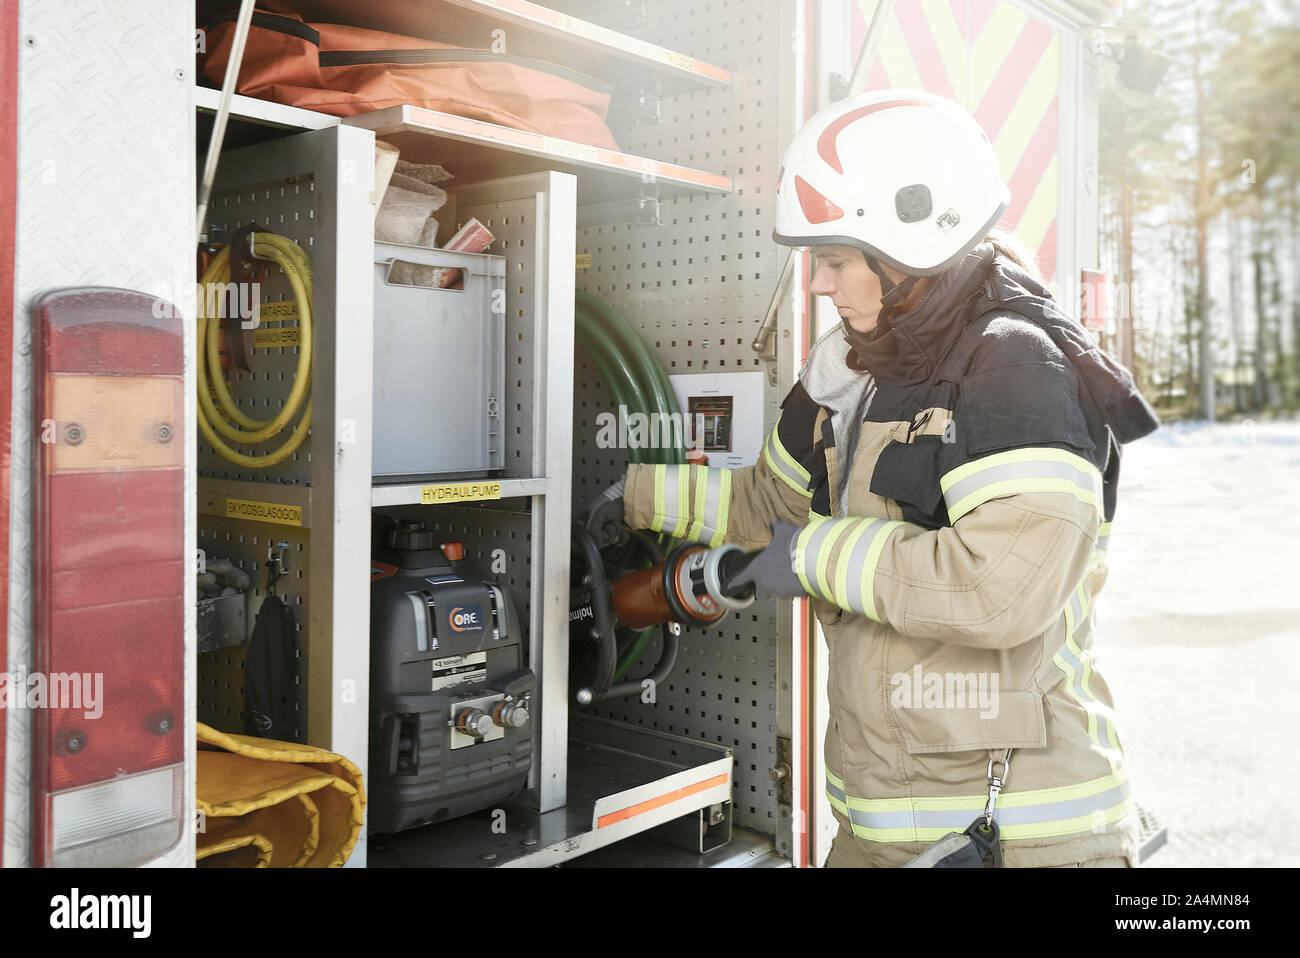 Firefighter near fire engine Stock Photo